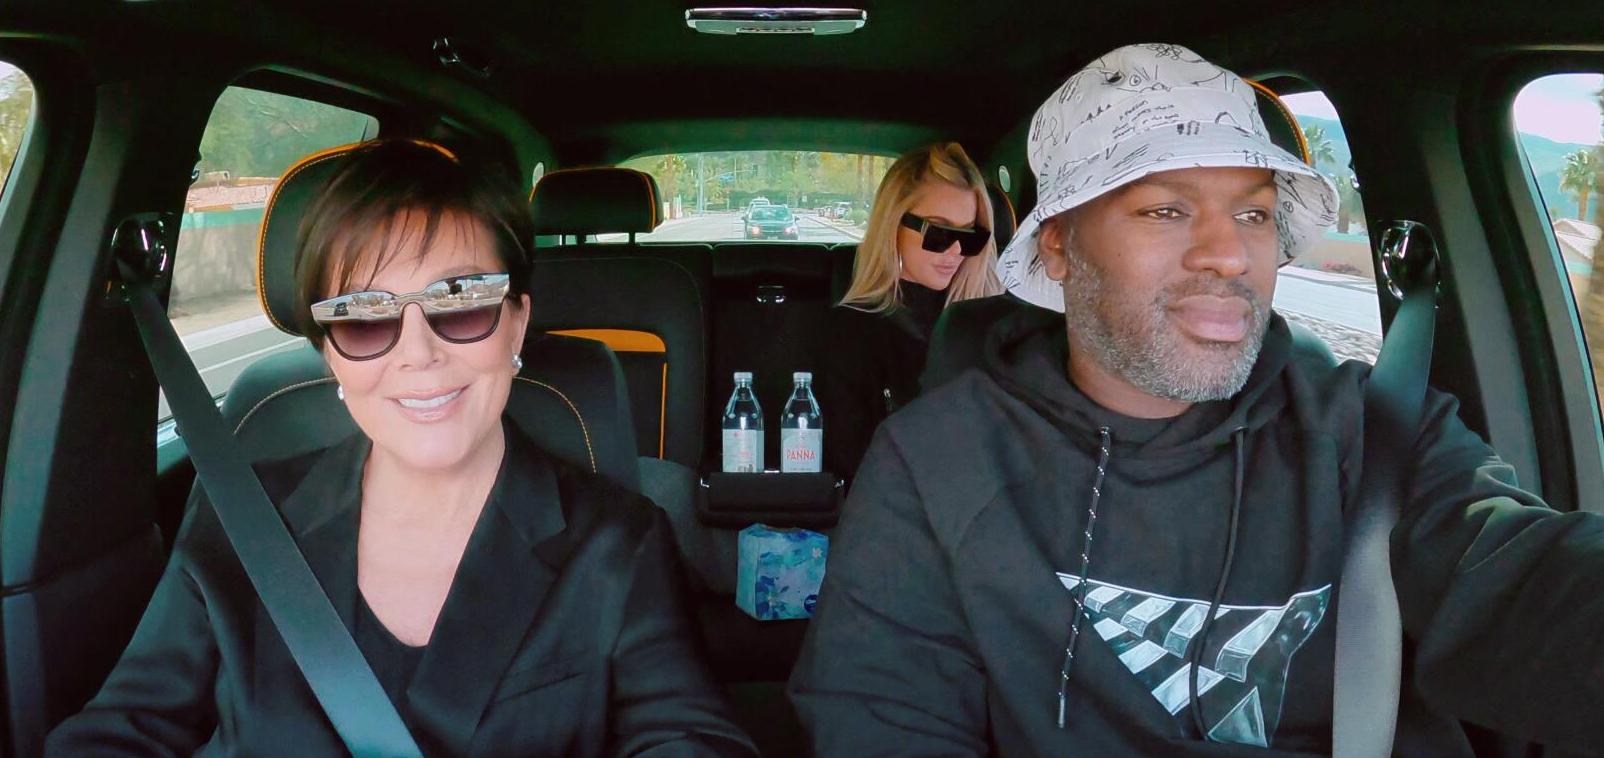 Kris Jenner, Khloe Kardashian, and Cory Gamble in a vehicle in Hulu's 'The Kardashians'